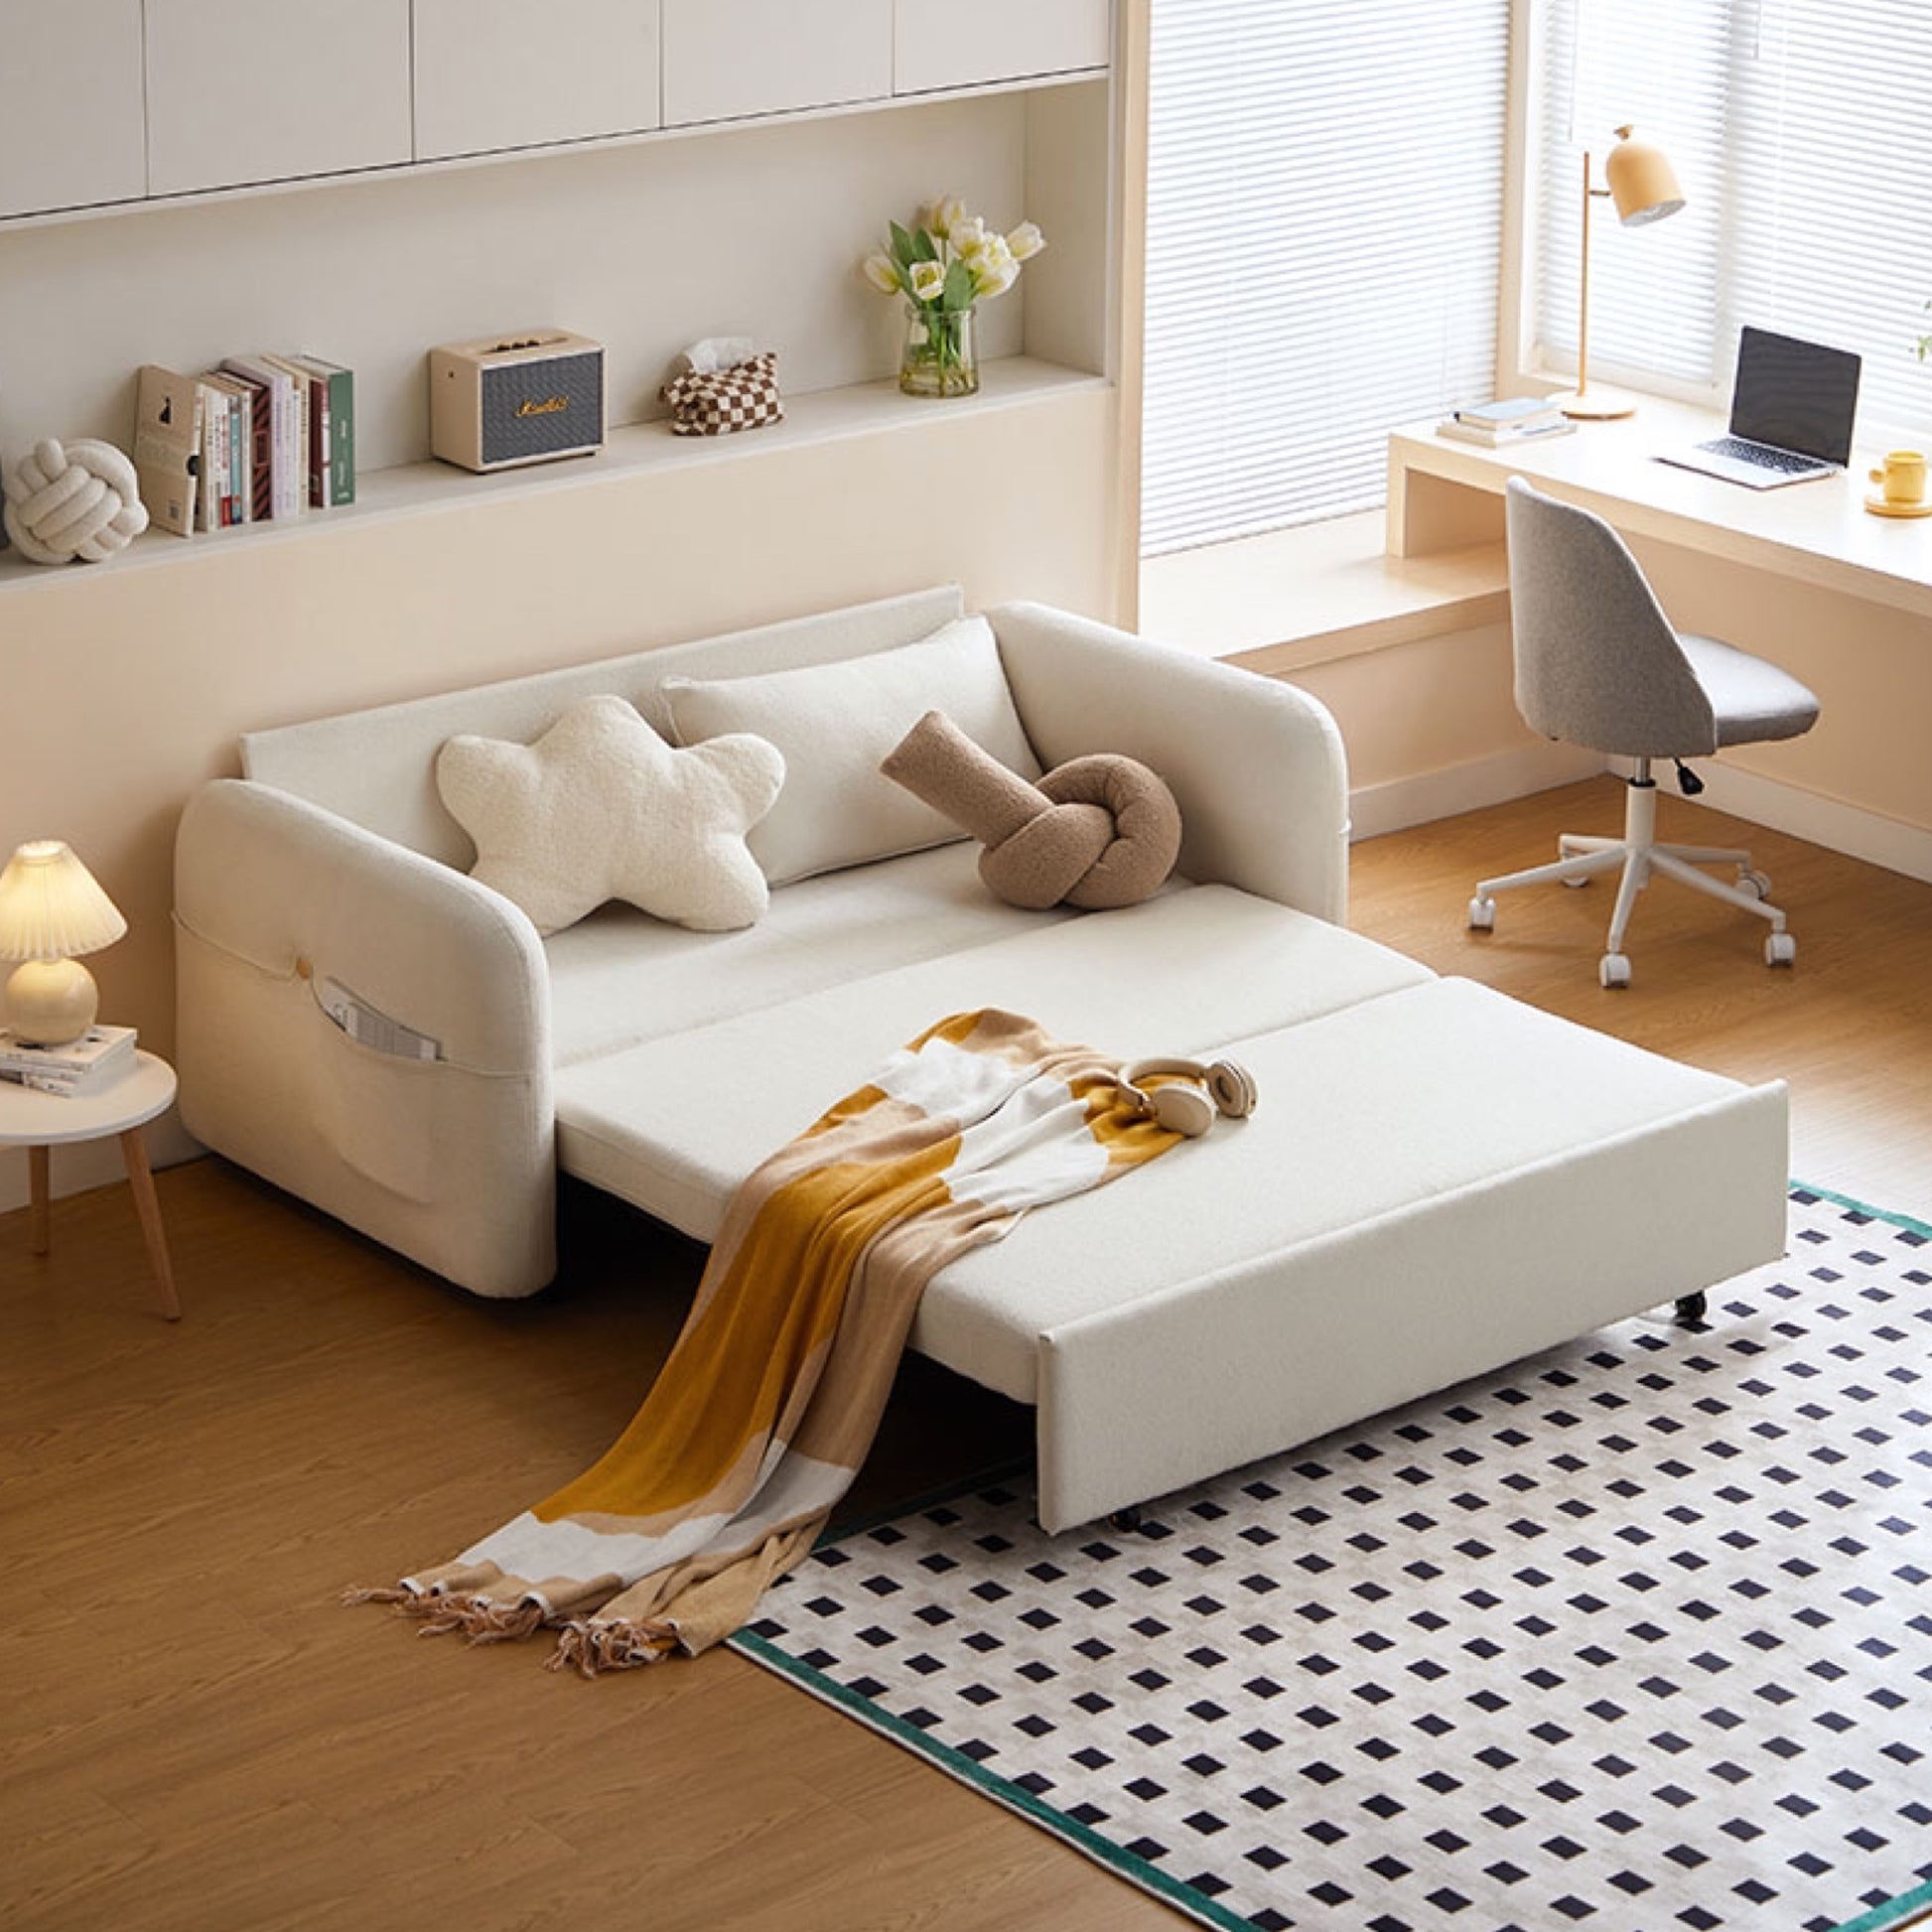 Furniture-sofa-sofa bed-comfort-cushions-pillow-cover-throw blankets-coffee tea